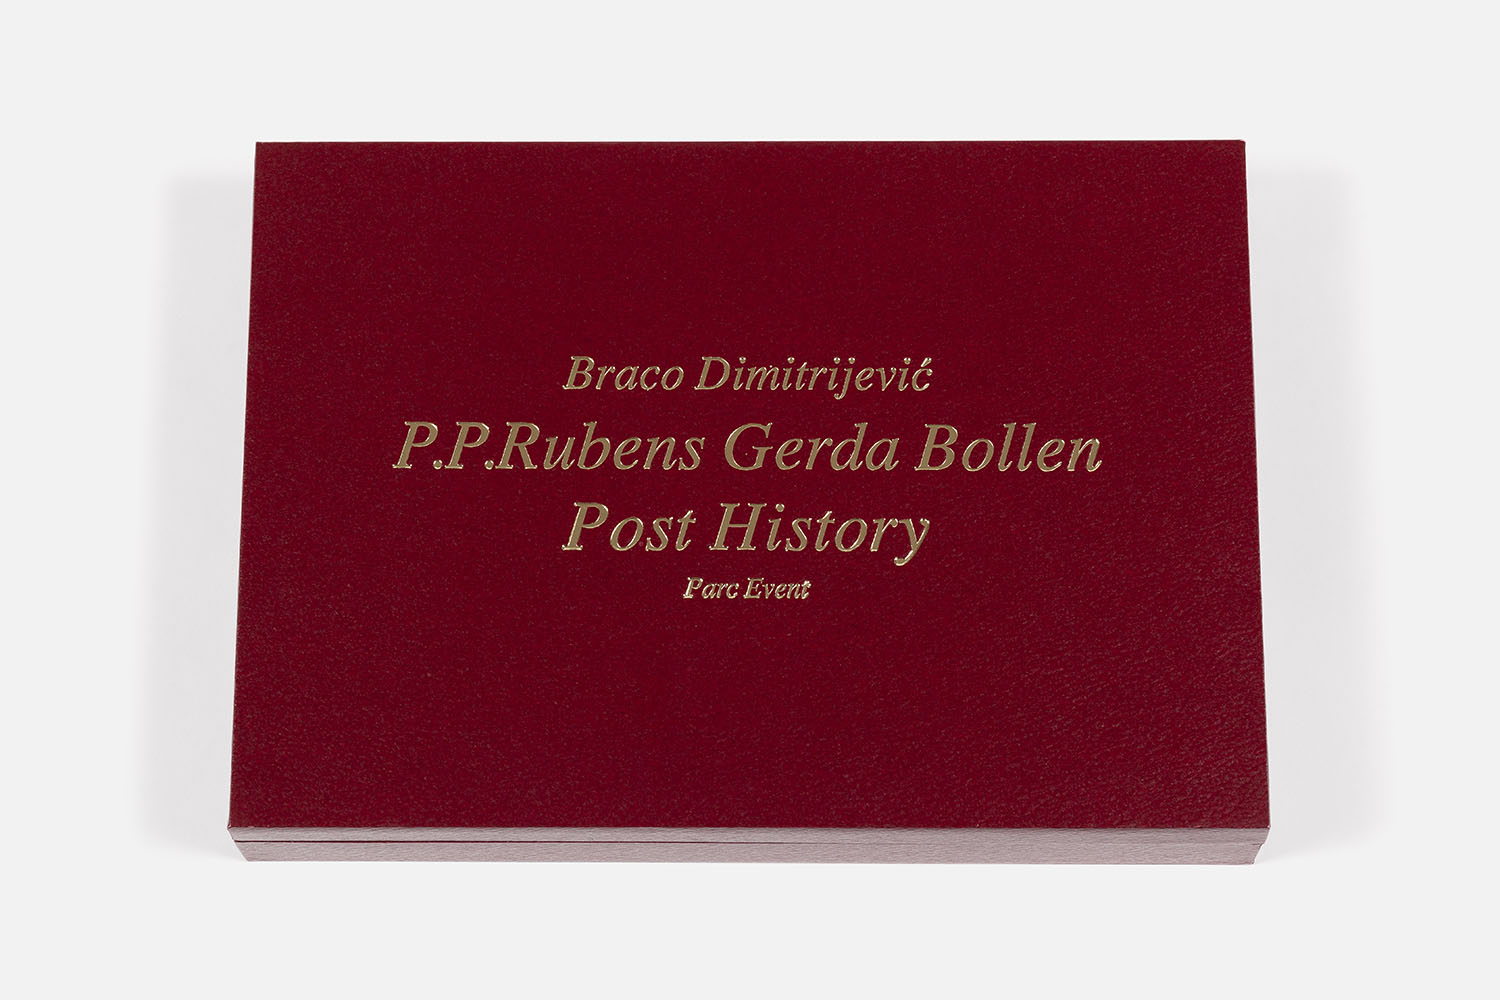 Parc Event / P.P. Rubens - Gerda Bollen, 1992 - Additional view